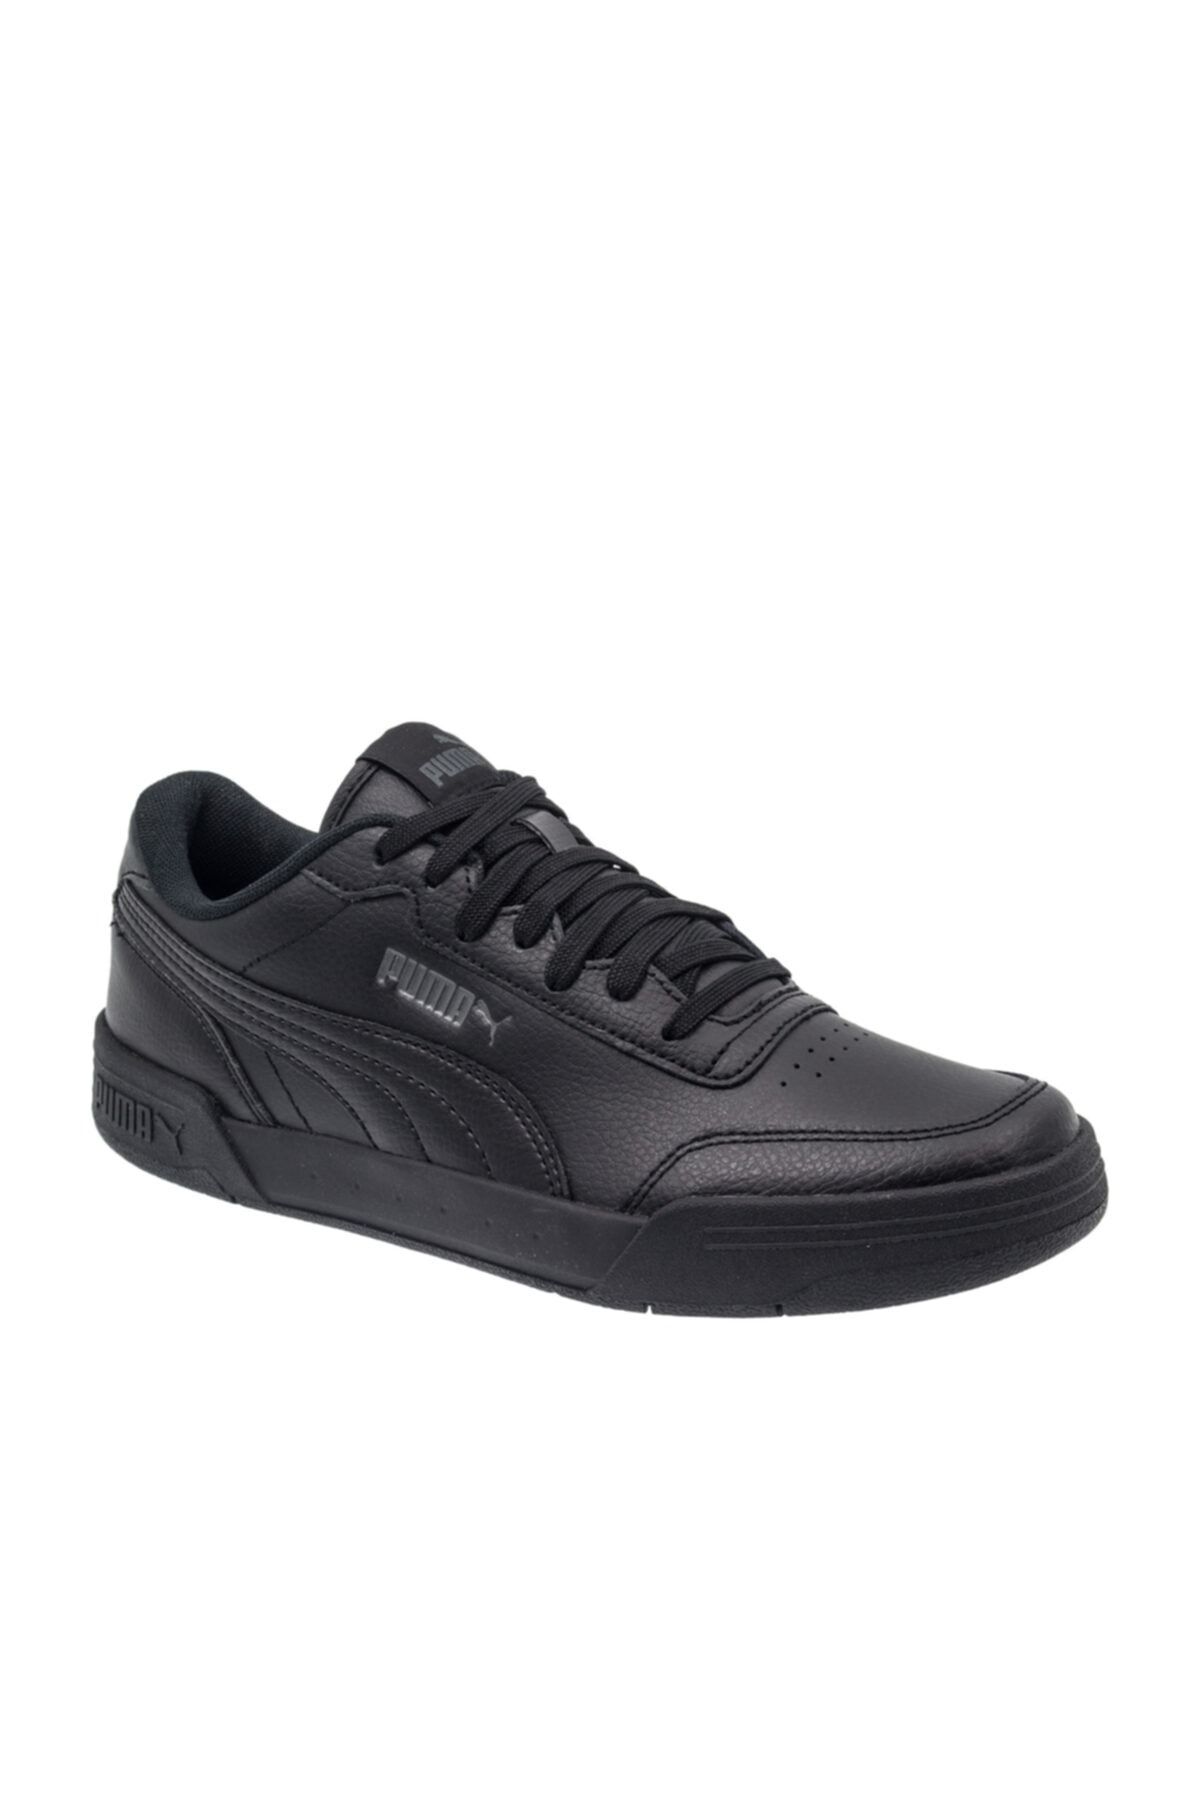 Puma CARACAL Siyah Erkek Sneaker Ayakkabı 100480548